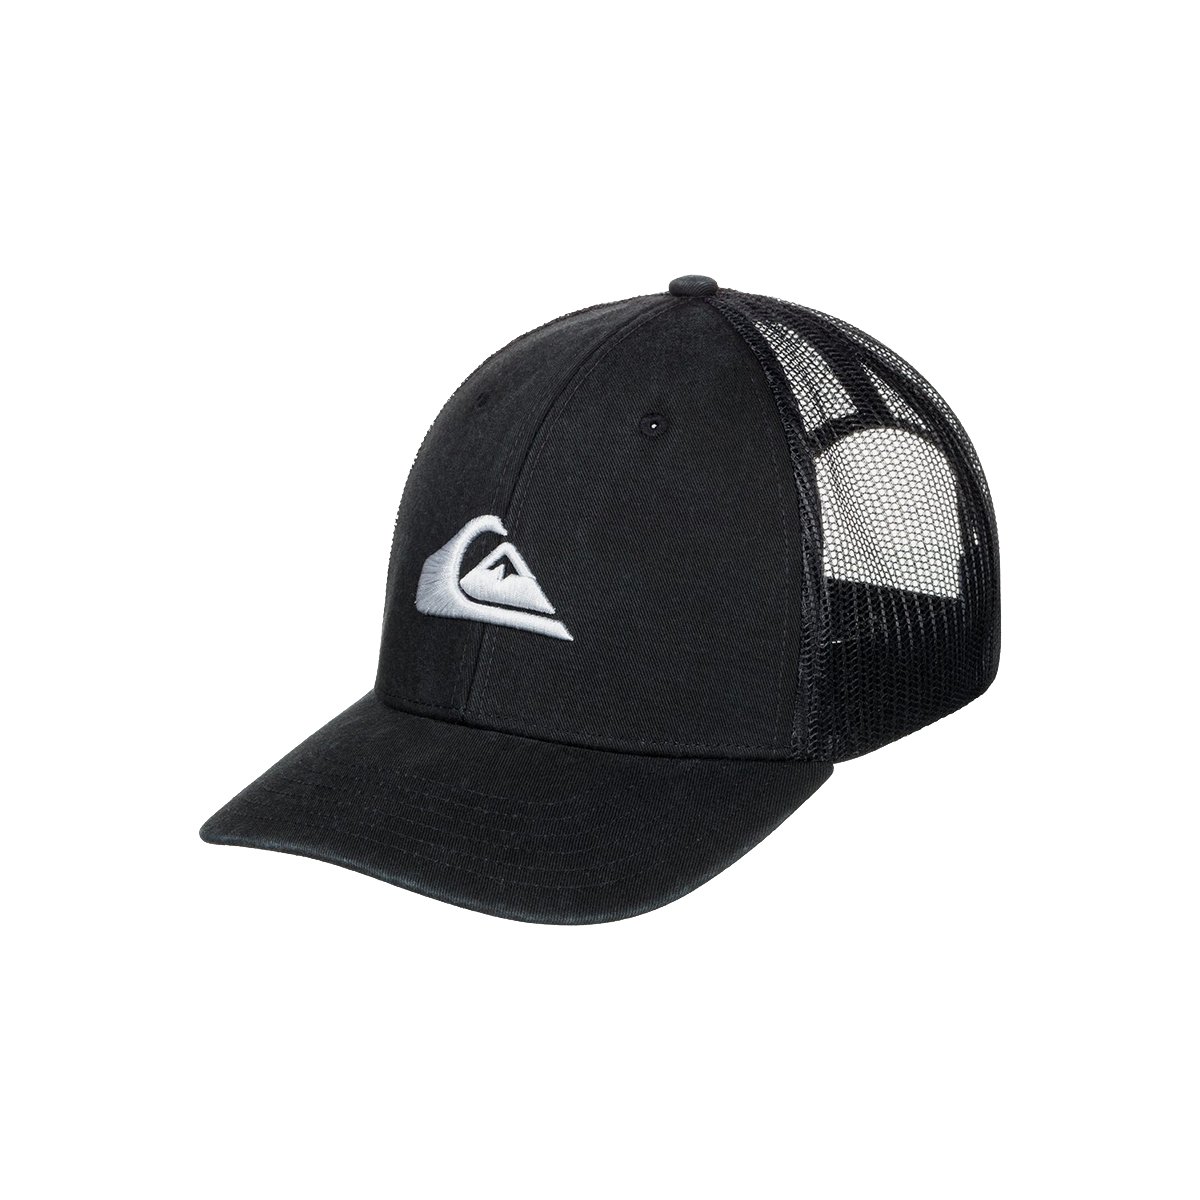 Quiksilver Grounder Şapka - Siyah - 1